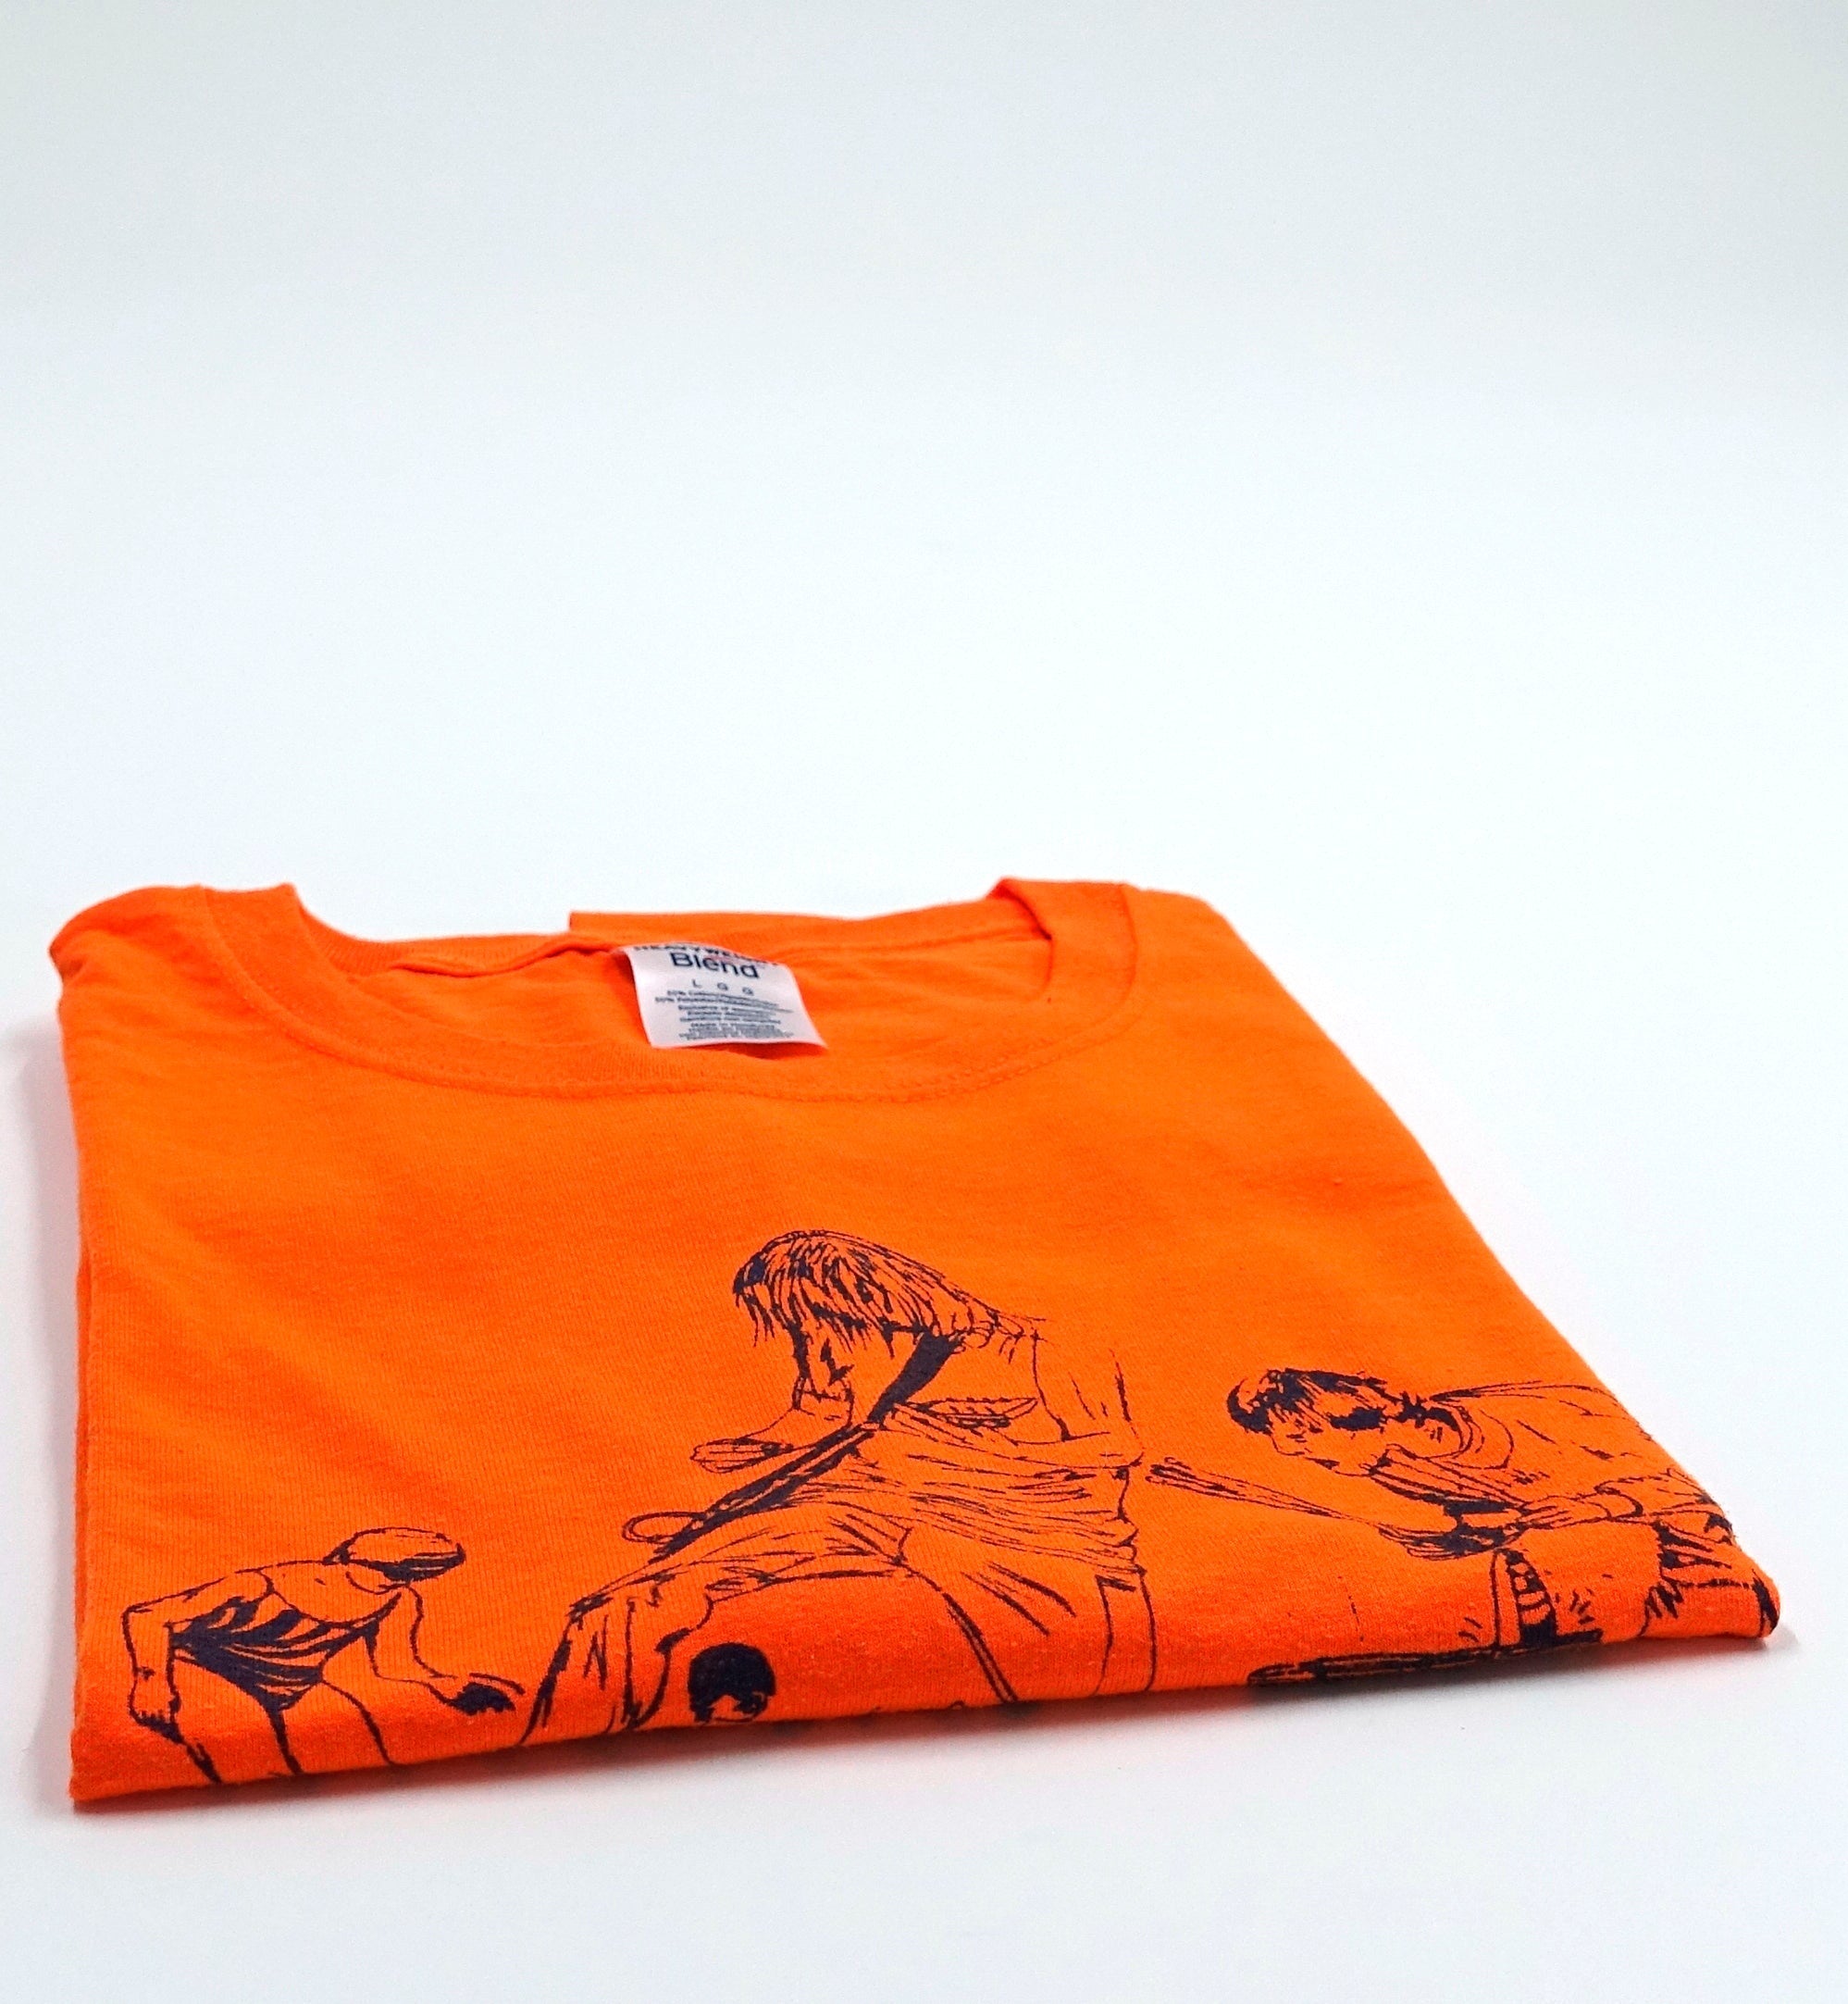 Liars - Drums Not Dead Scribble Drawing Orange 2005 Tour Shirt Size Large